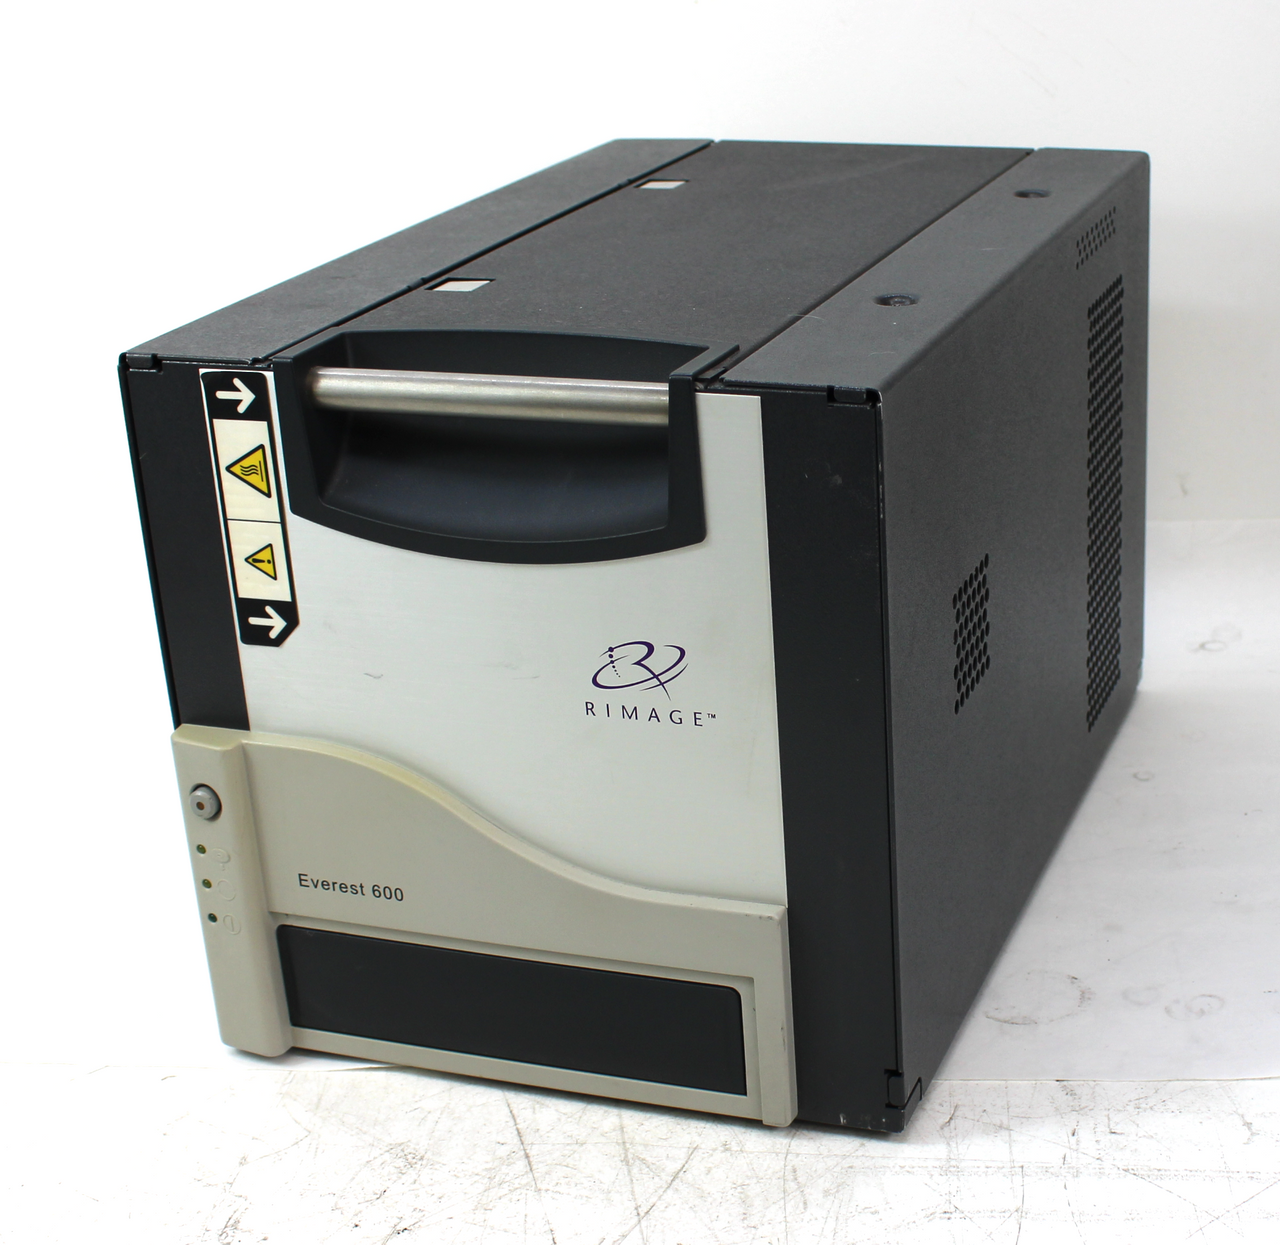 Rimage CDPR23 Everest 600 Thermal Printer